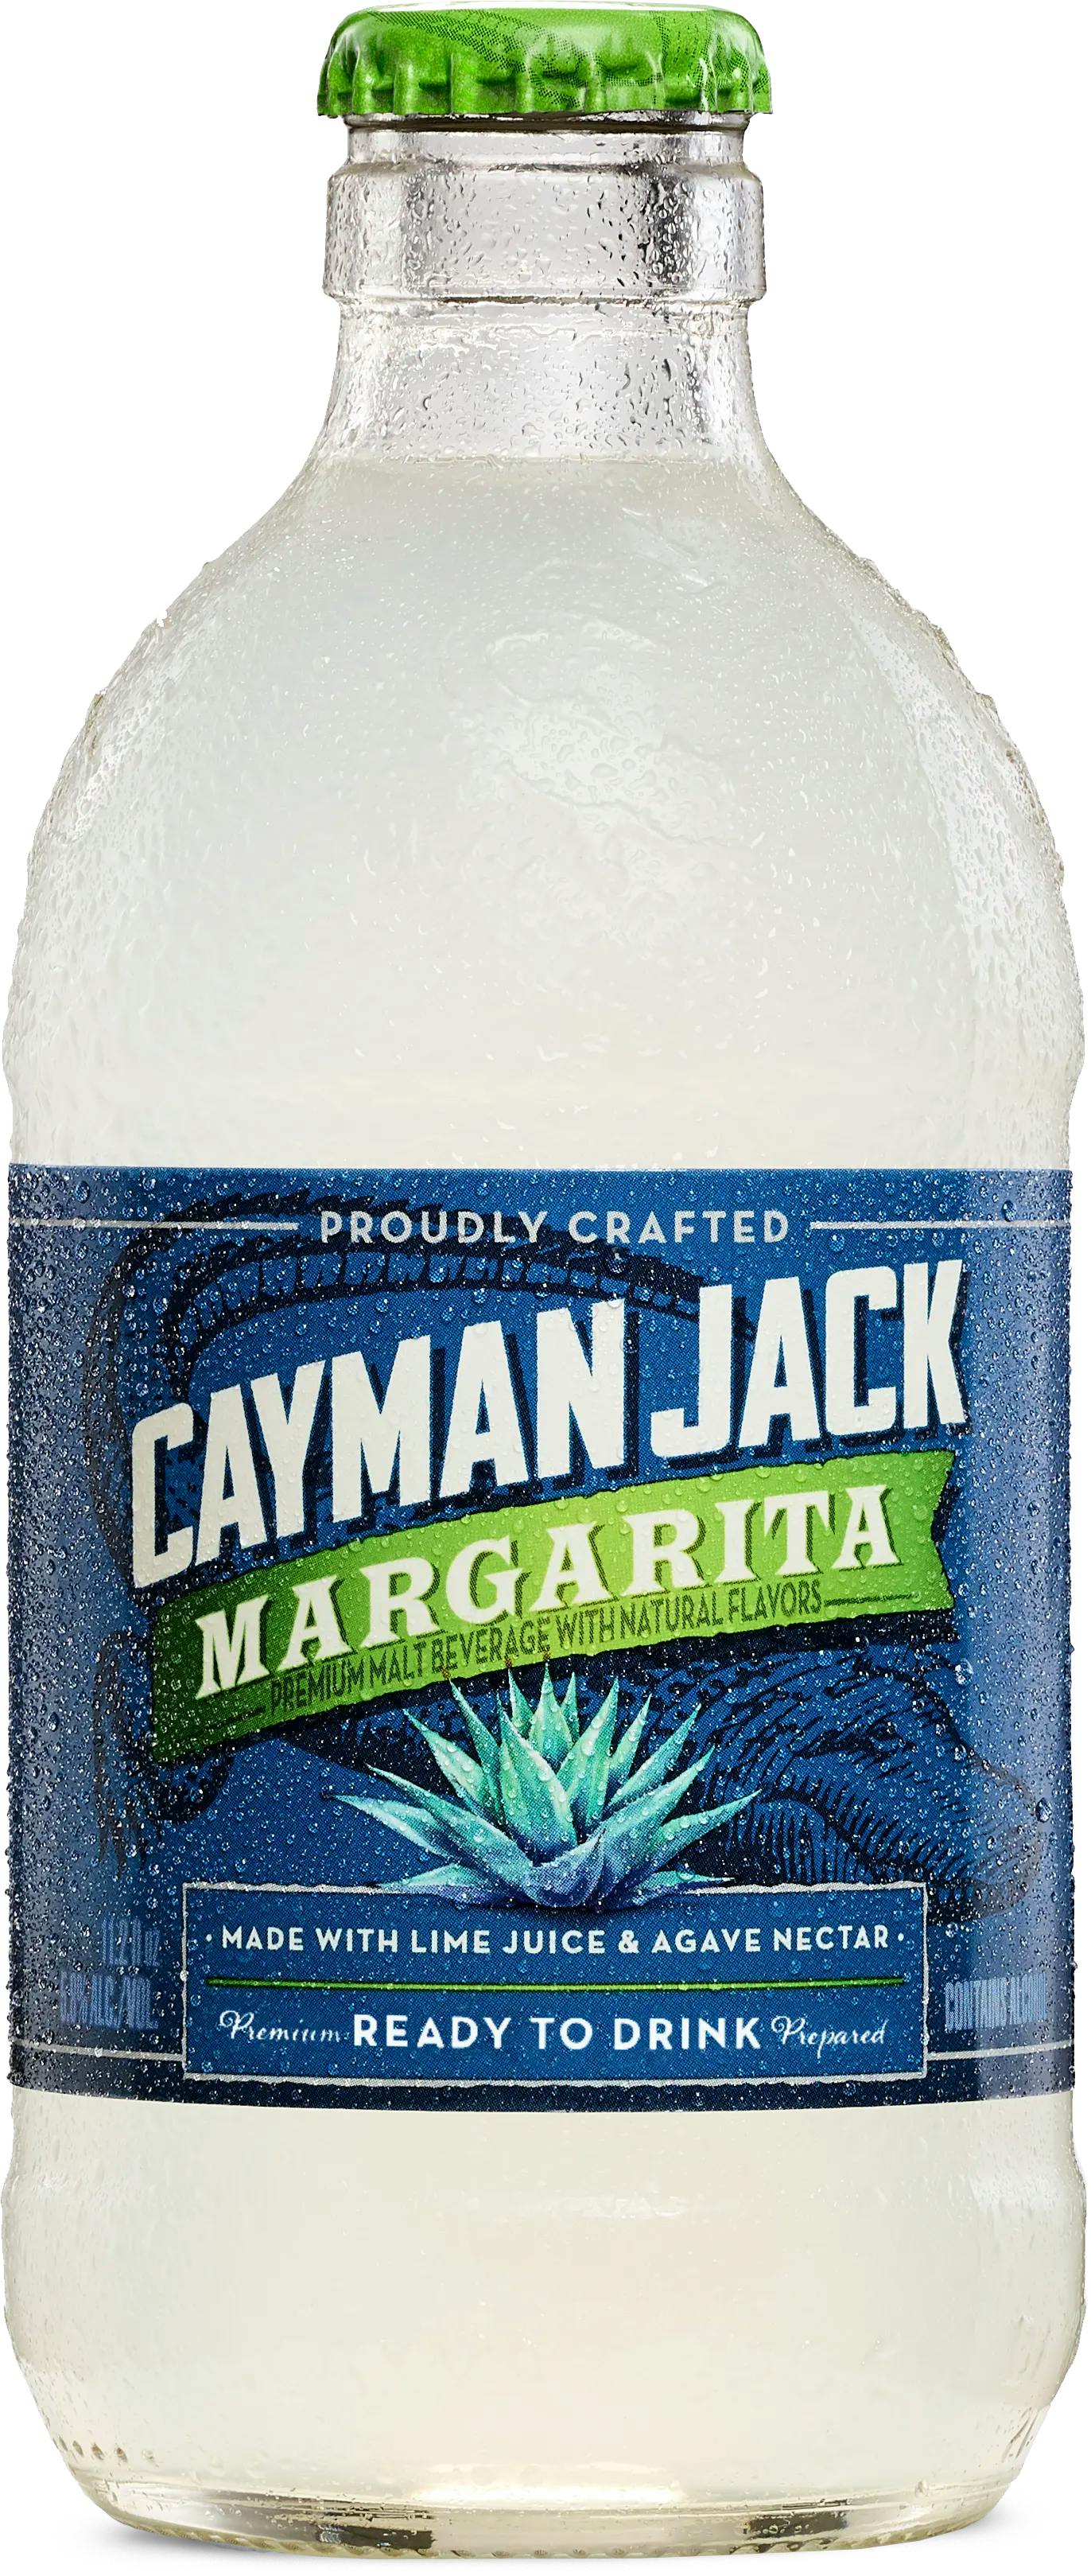 cayman-jack-margarita-6-pack-12-oz-vine-republic